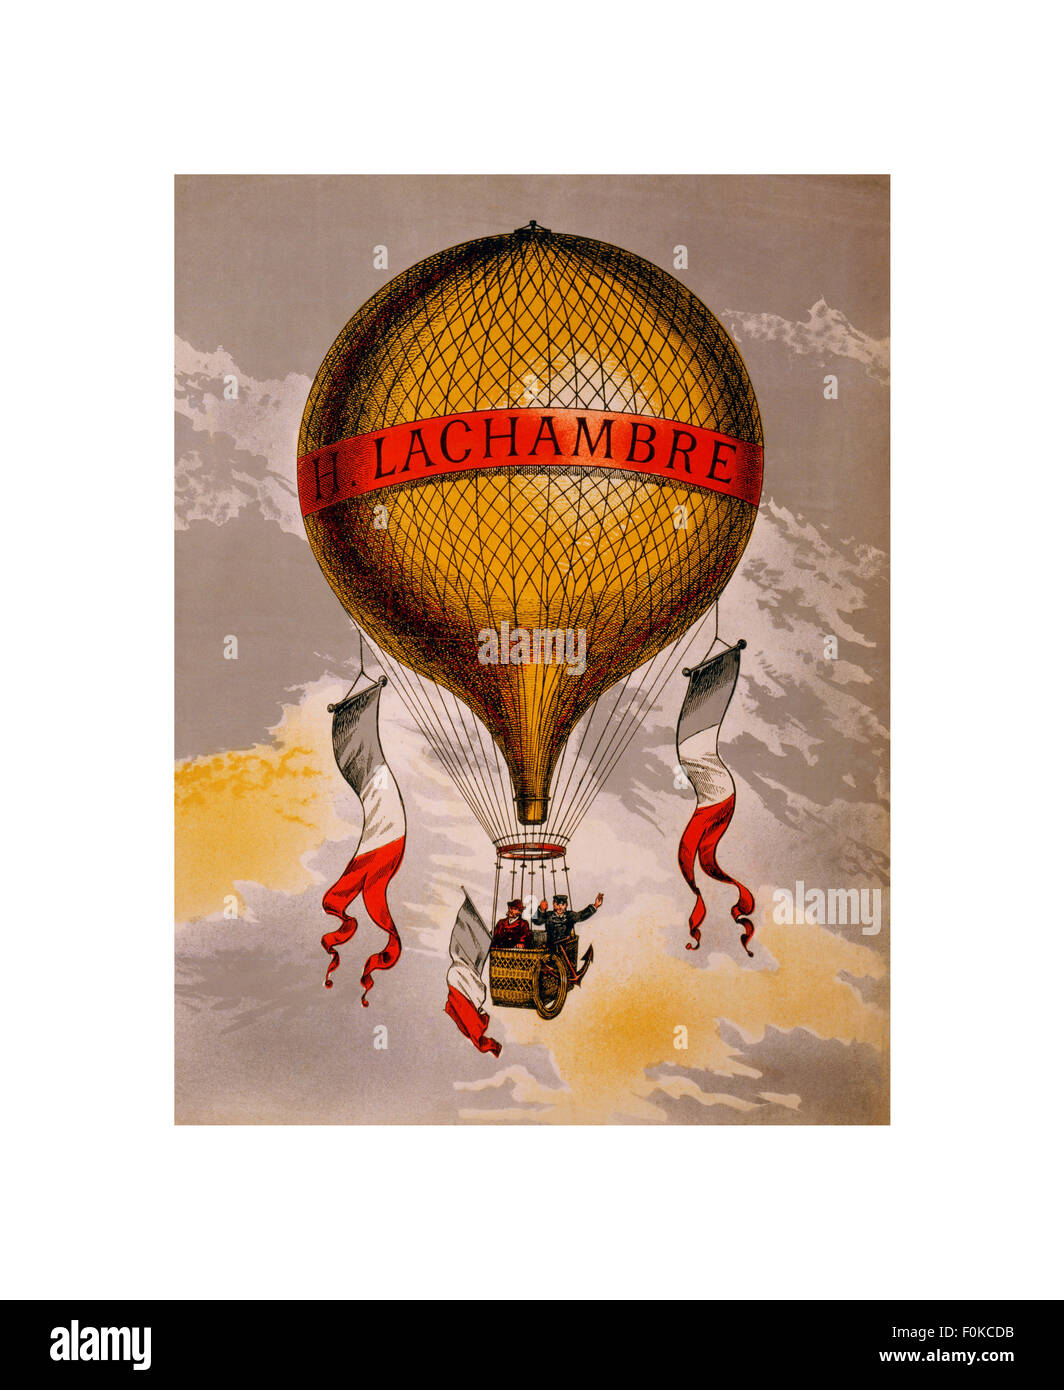 VINTAGE HOT AIR BALLOON MANUFACTURER Henri Lachambre - Vintage French Hot Air Balloon Travel Trip Tour Poster 1890's Stock Photo